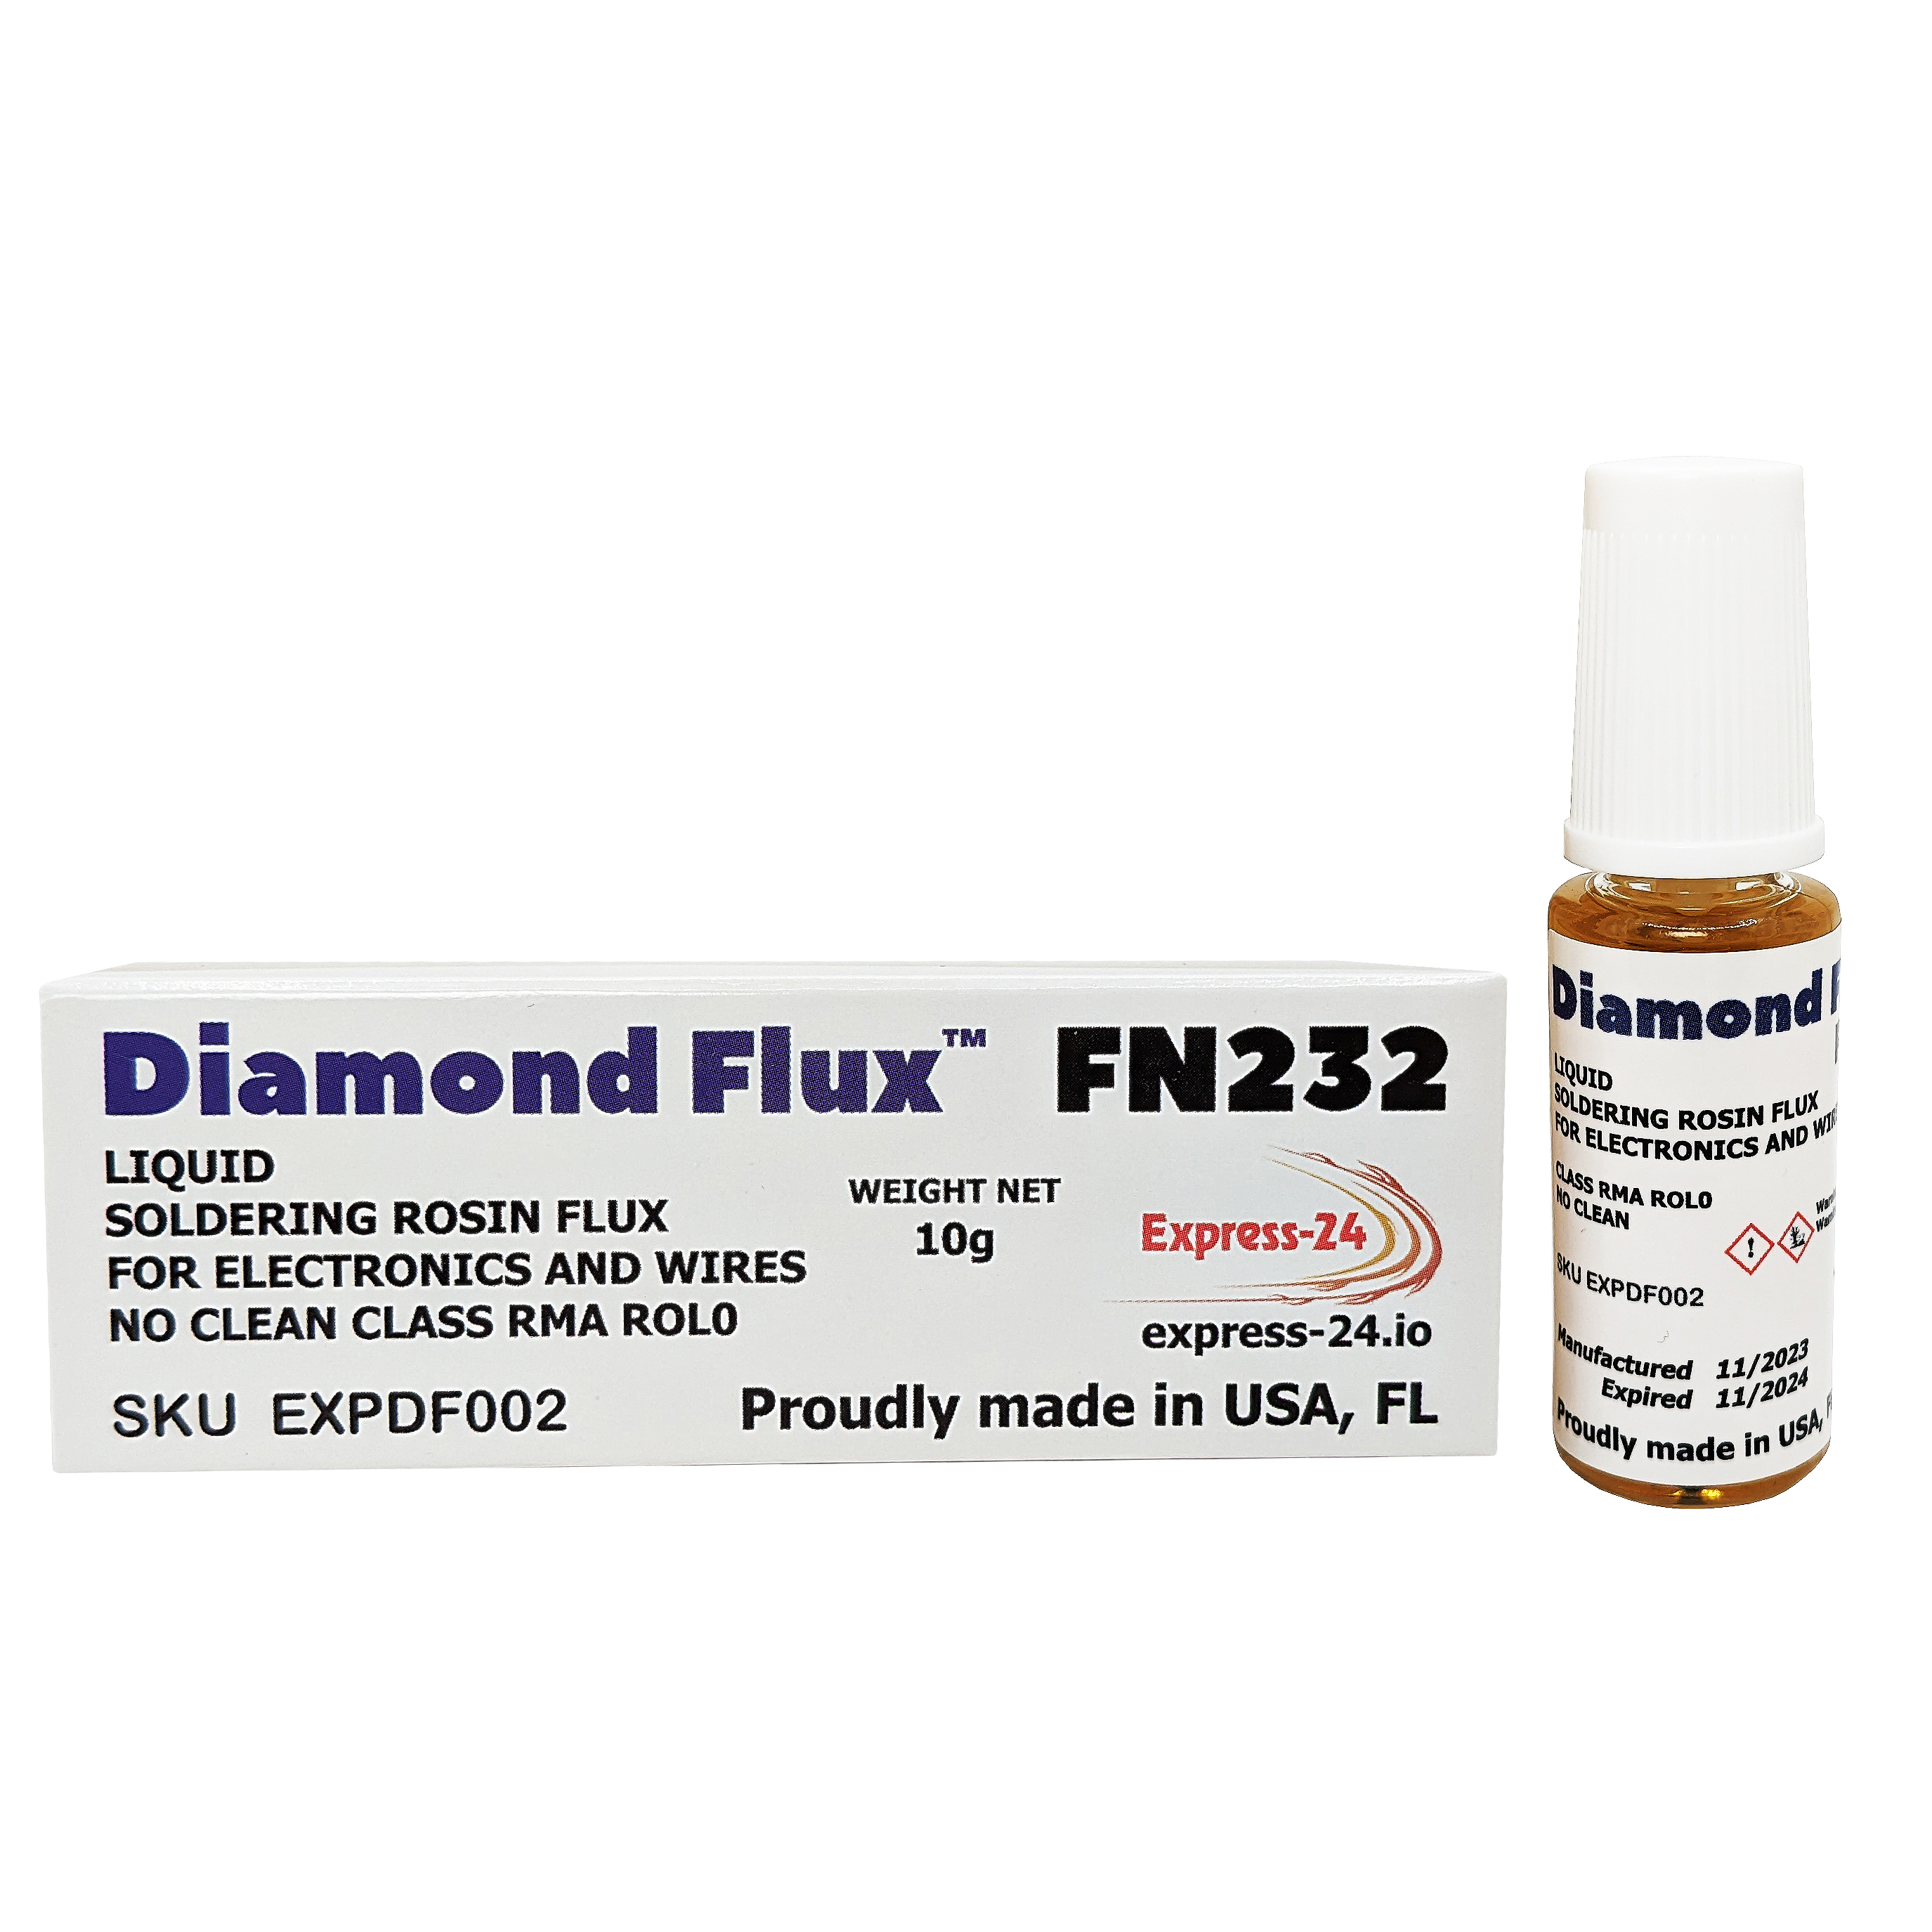 The model is Diamond Flux FN232